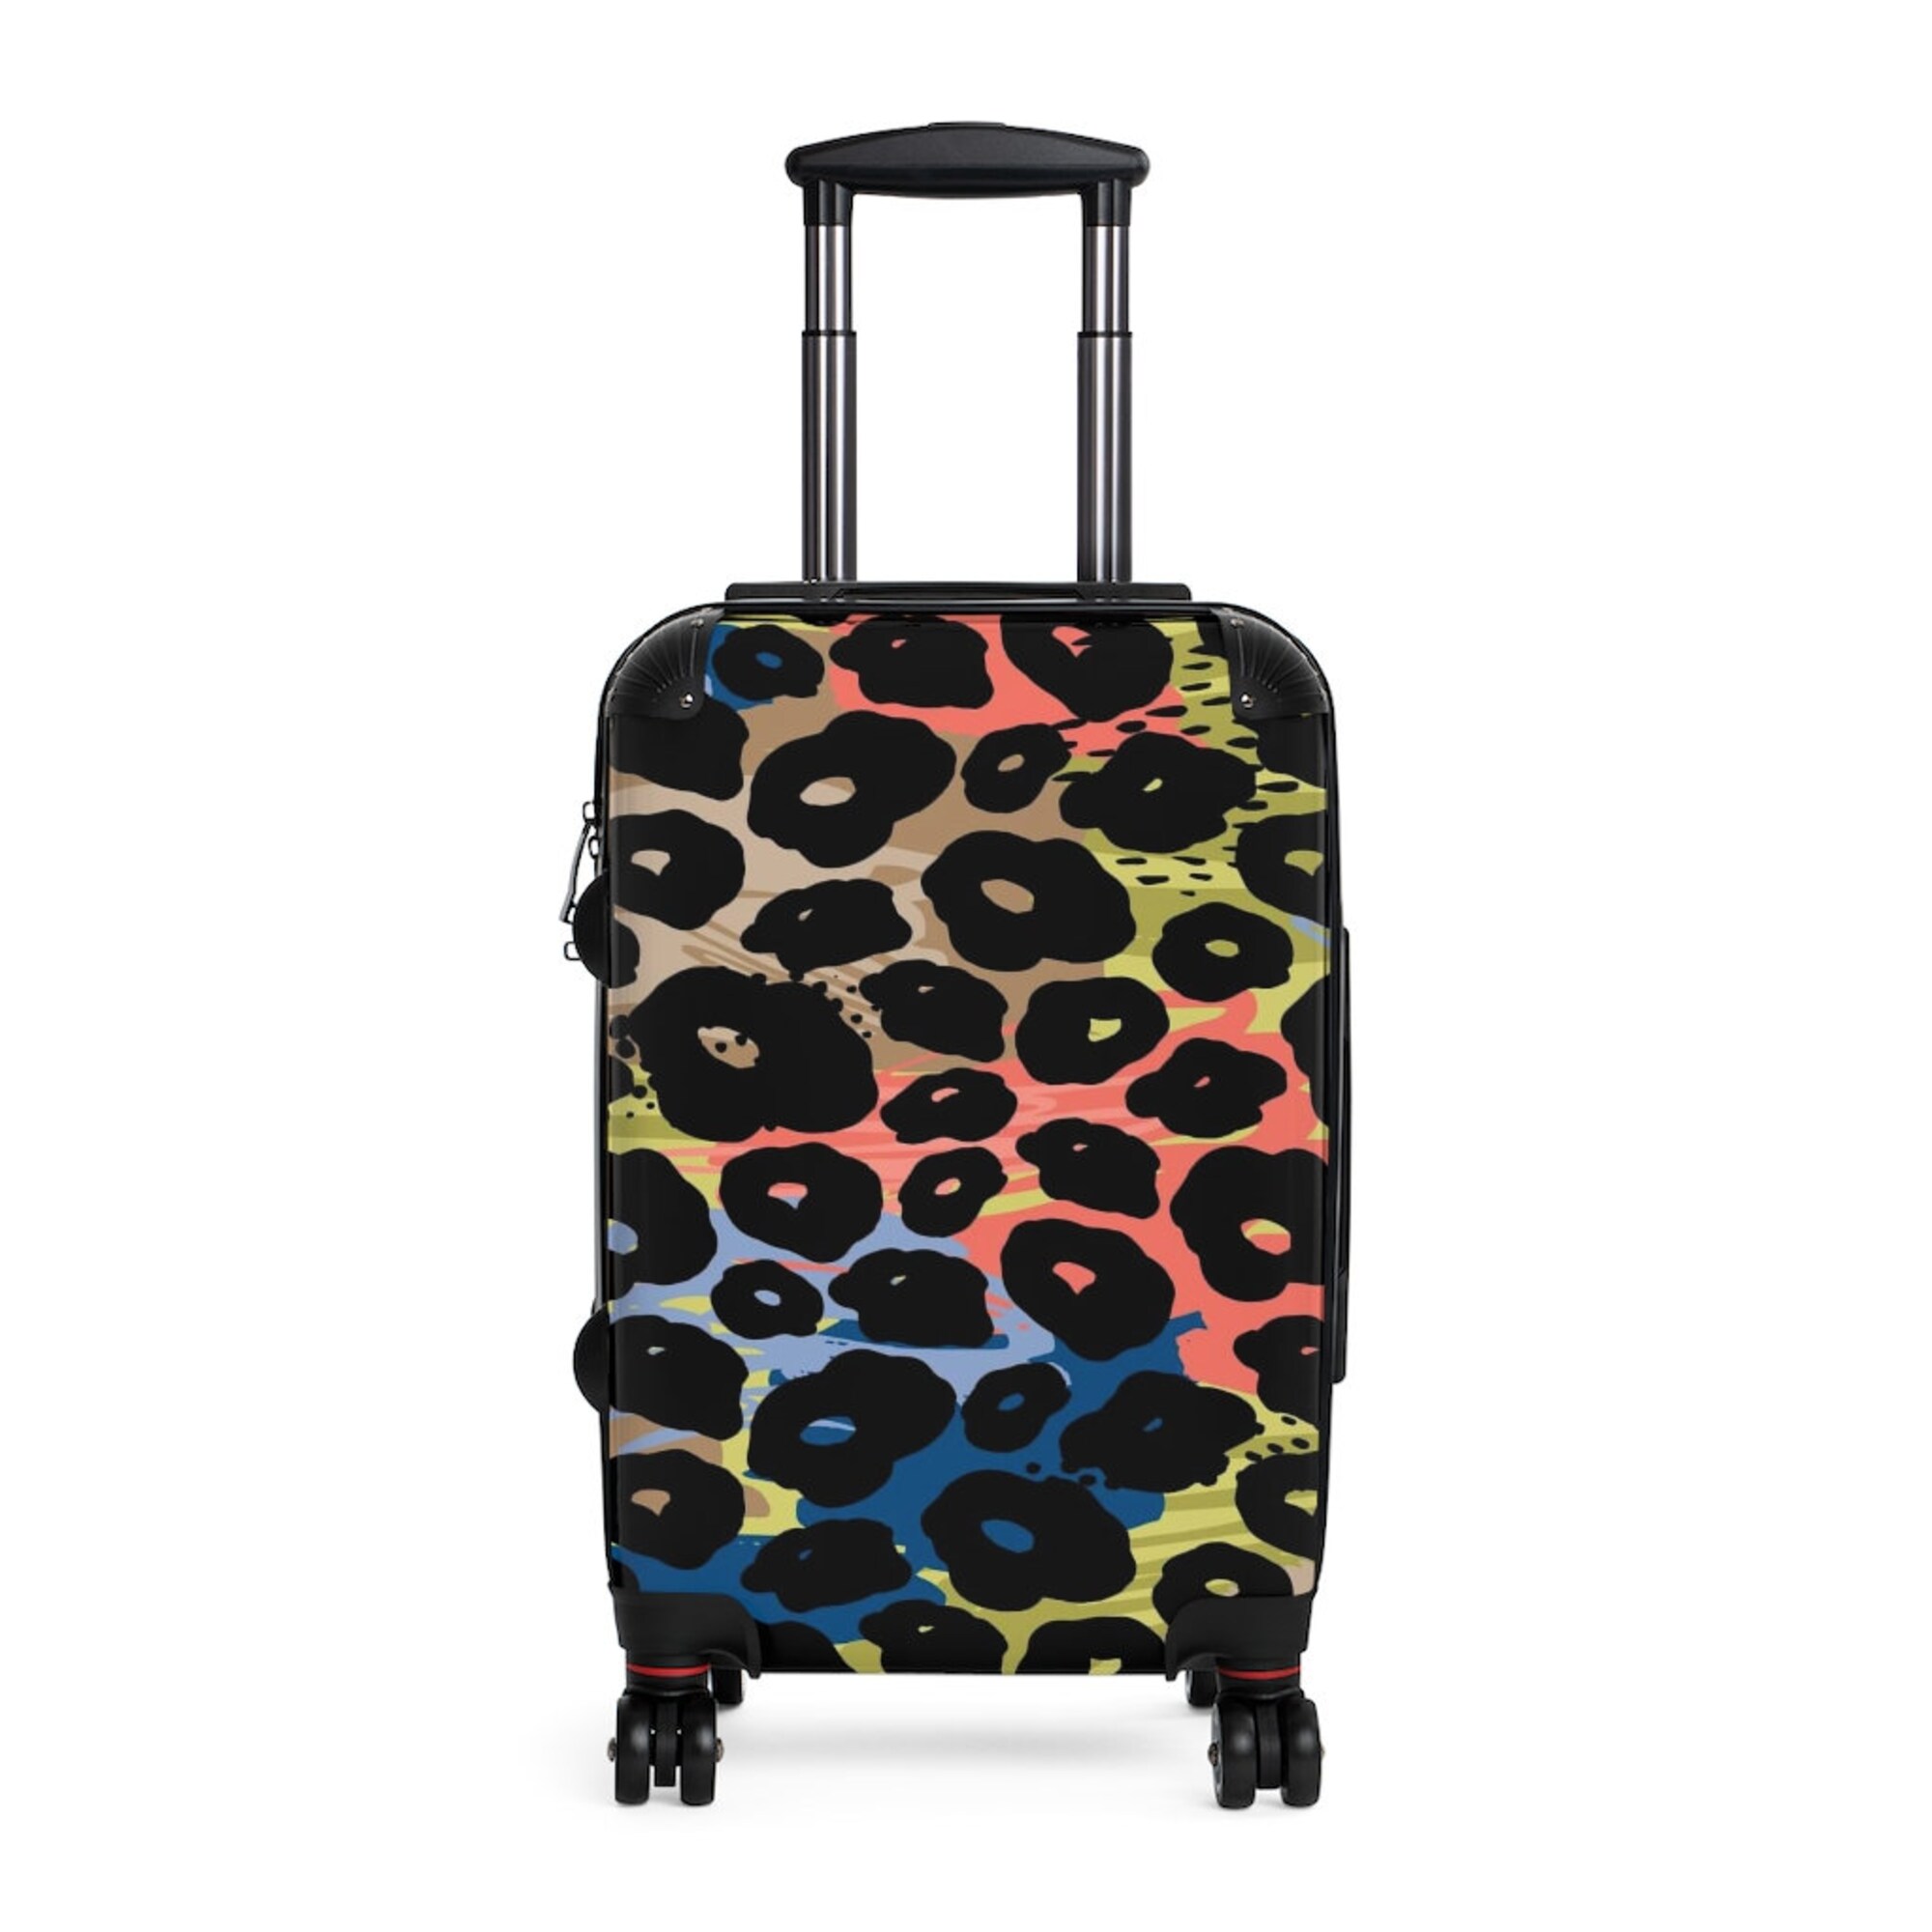 The Wild Leopard Suitcase